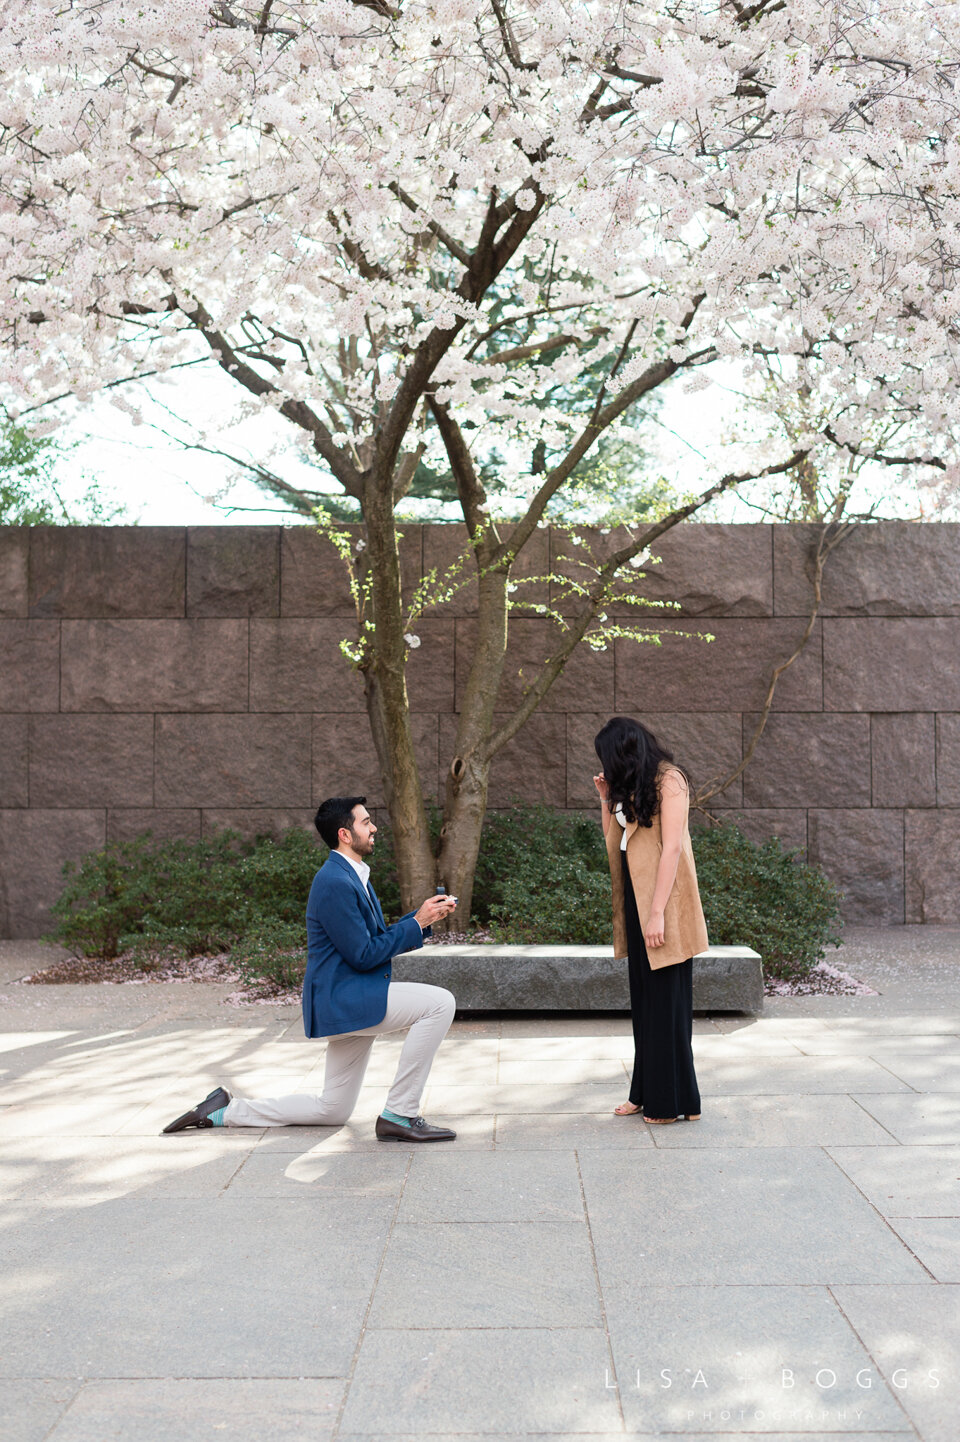 a&k-dc-cherry-blossom-proposal-engagement-photos-washington-dc-cherry-blossoms-03.jpg